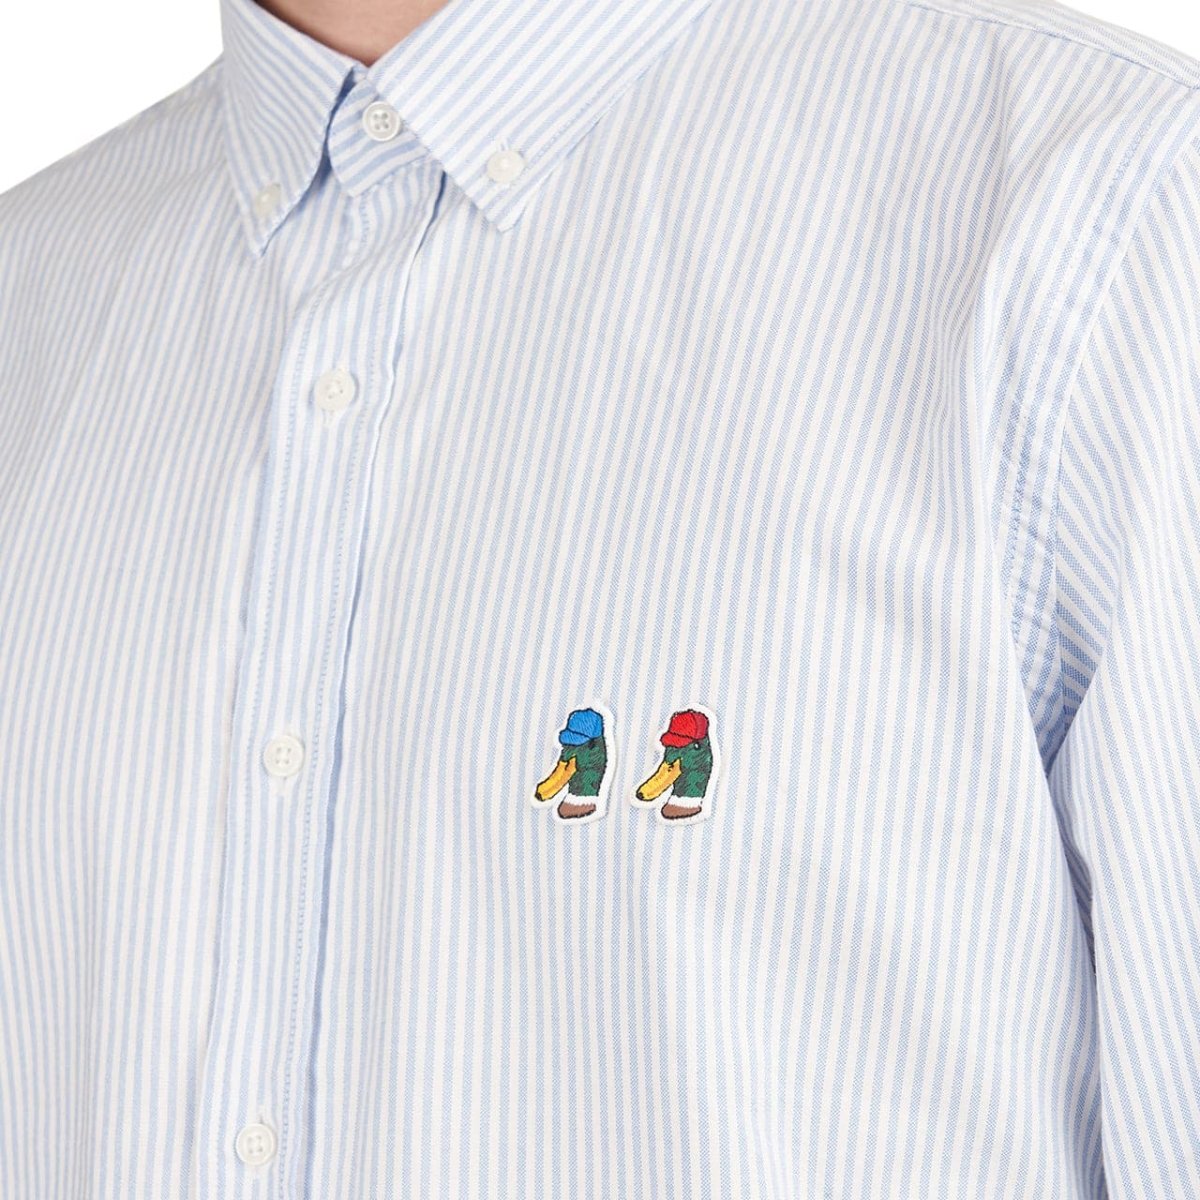 Edmmond Studios Special Duck Shirt vertical stripes (Blau)  - Allike Store